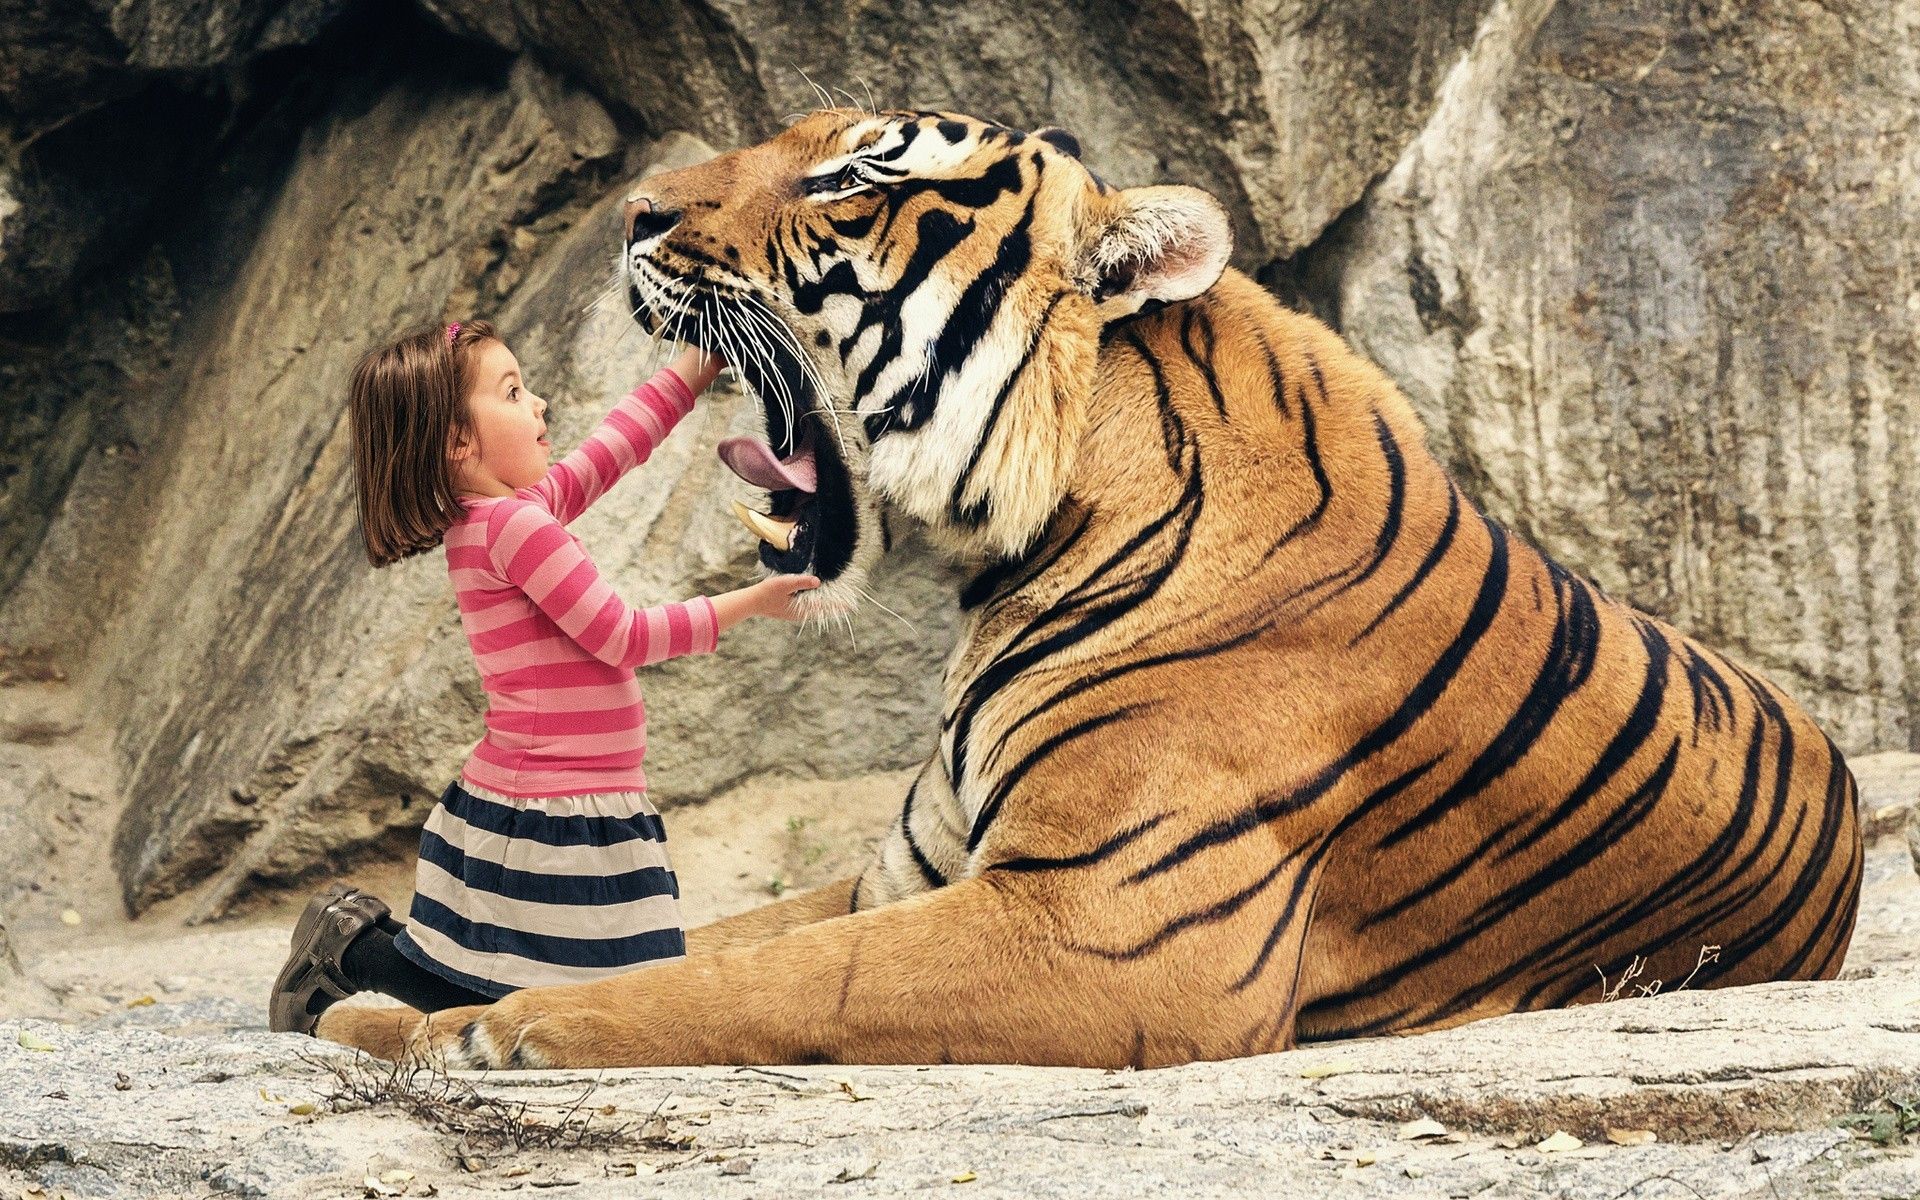 Brave little girl and tiger wallpaper download. Wallpaper